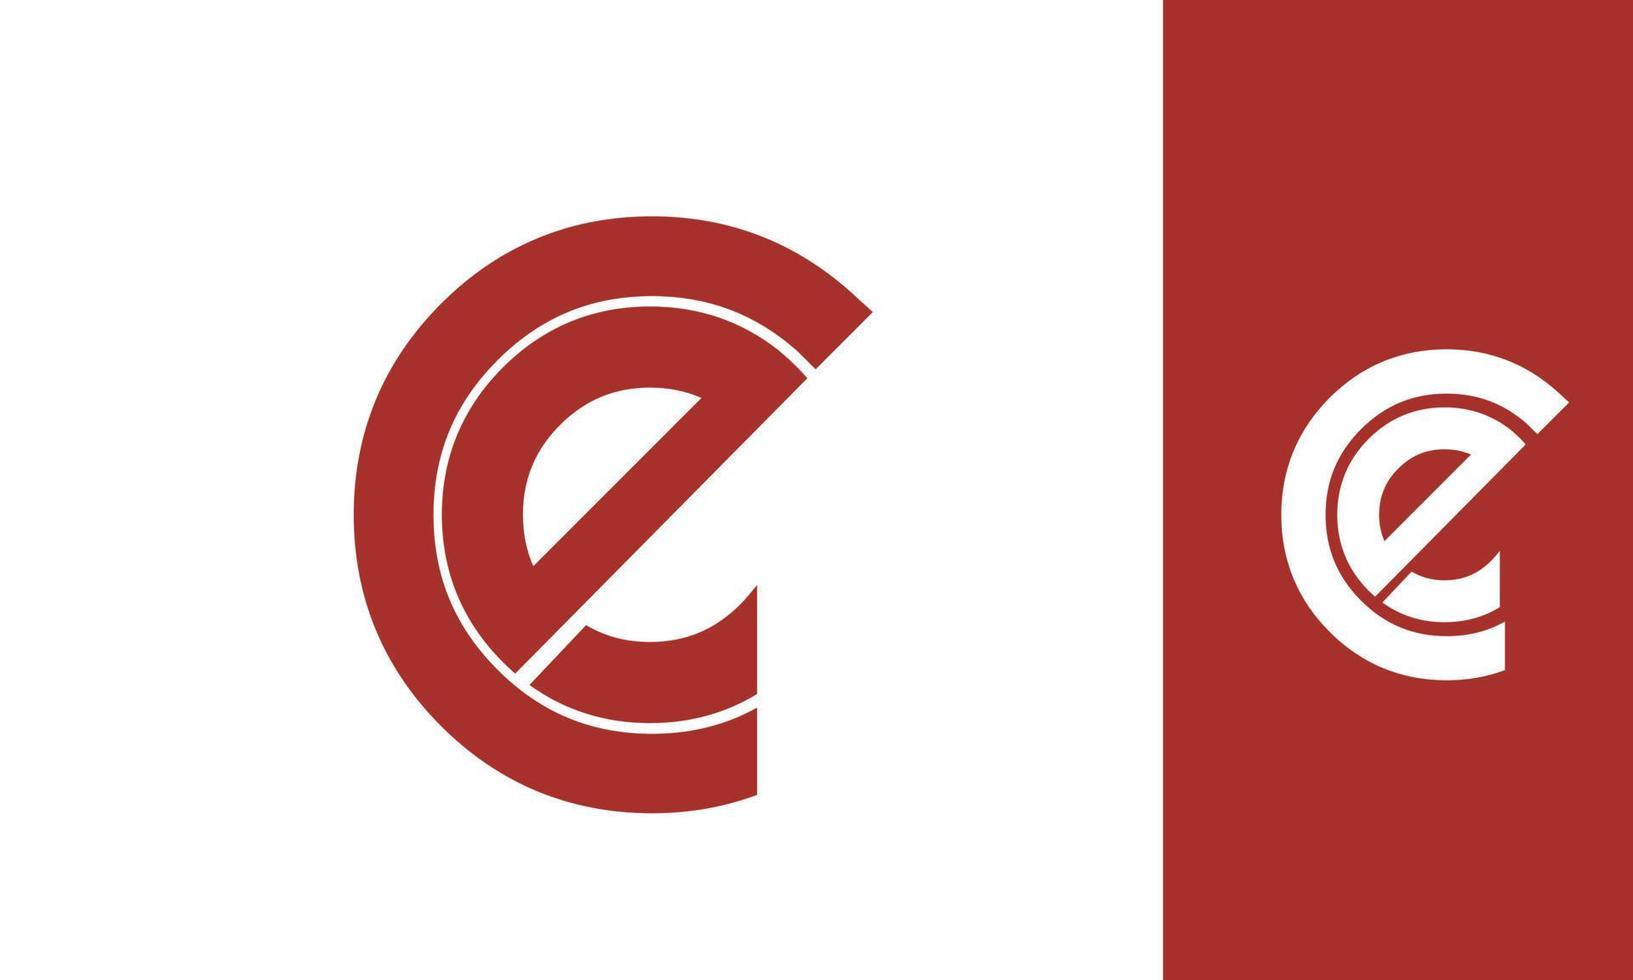 letras do alfabeto iniciais monograma logotipo ce, ec, c e e vetor